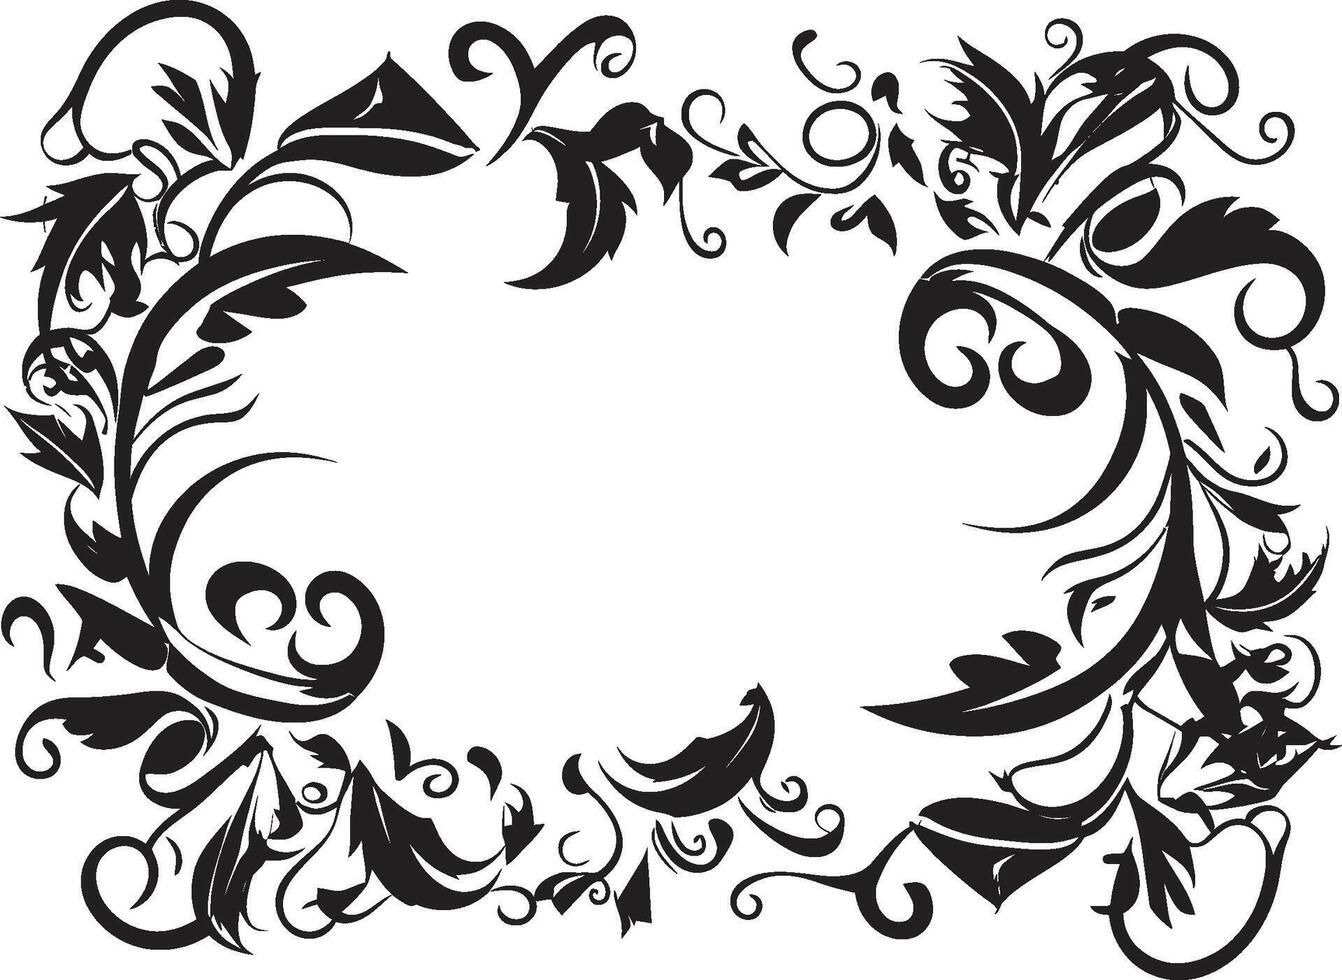 virvelvind av fantasier svartvit dekorativ ram element i elegant svart skulpterad spiraler chic logotyp terar klotter dekorativ ram element vektor